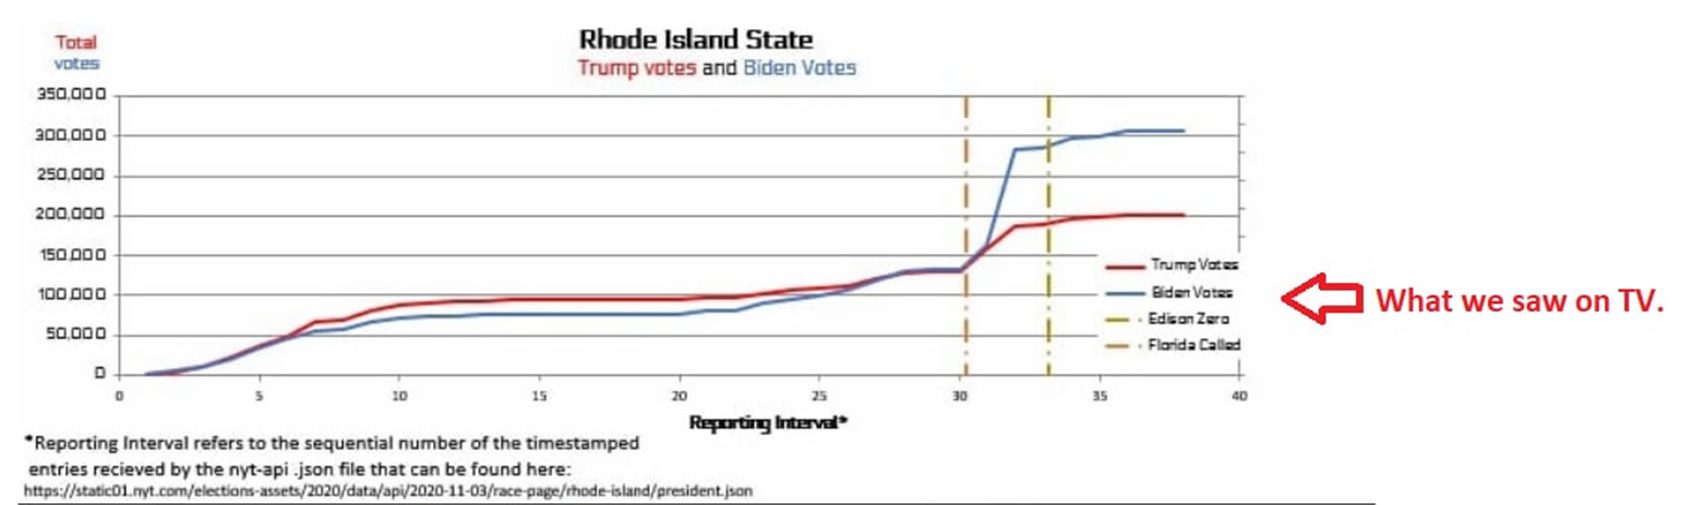 Rhode-Island-Cast-Vote-Record-1.jpg